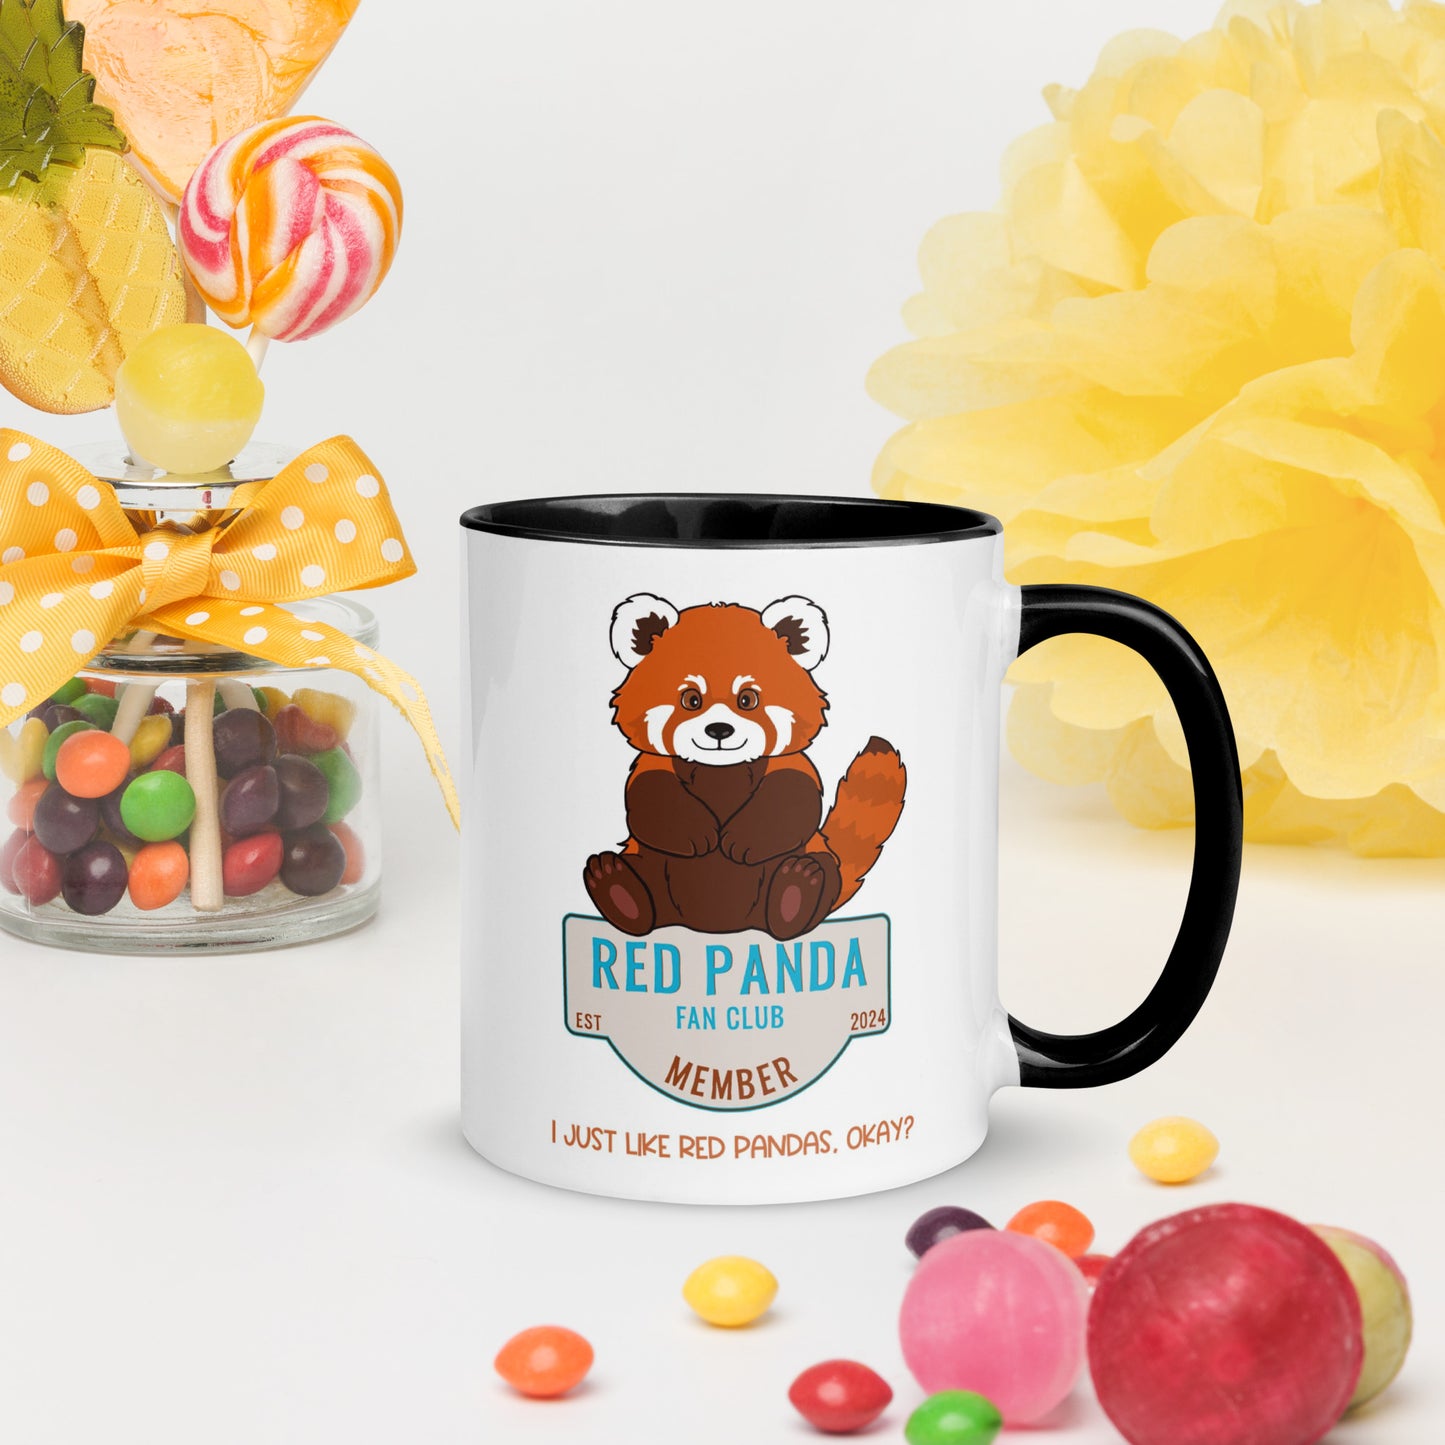 Red Panda Fan Club Mug in two sizes